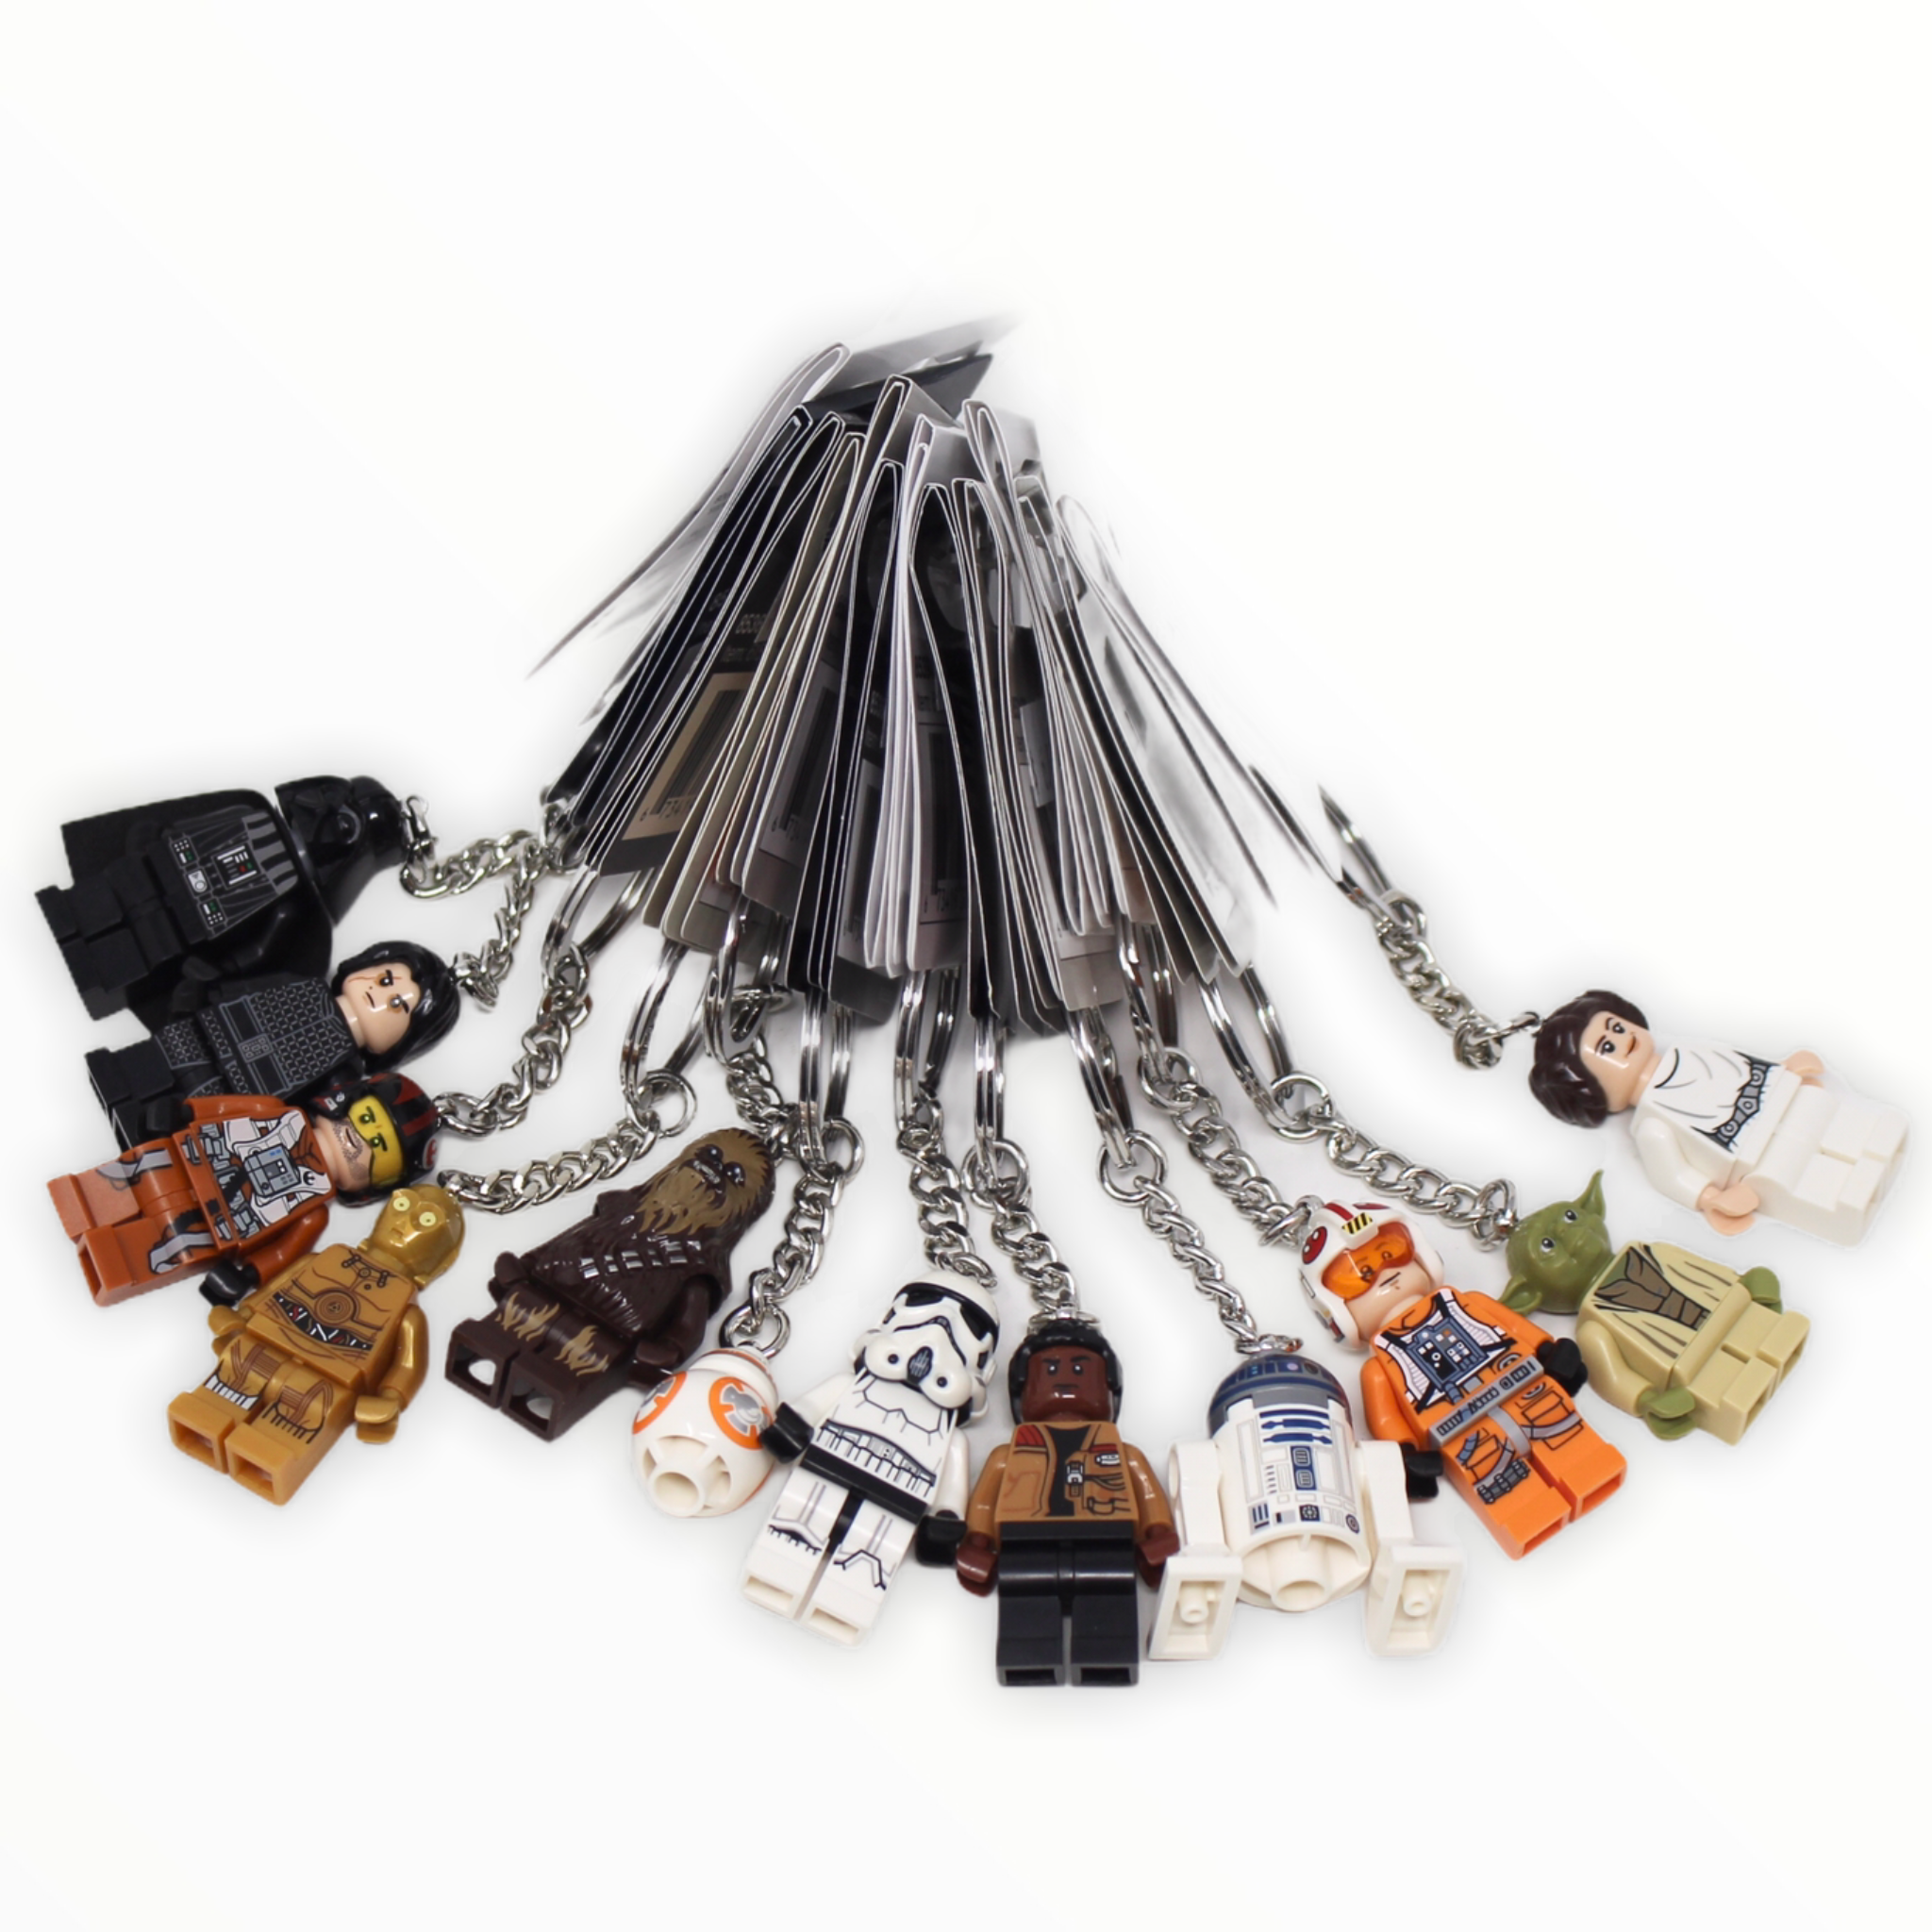 Free Random “May the 4th” Star Wars Keychain